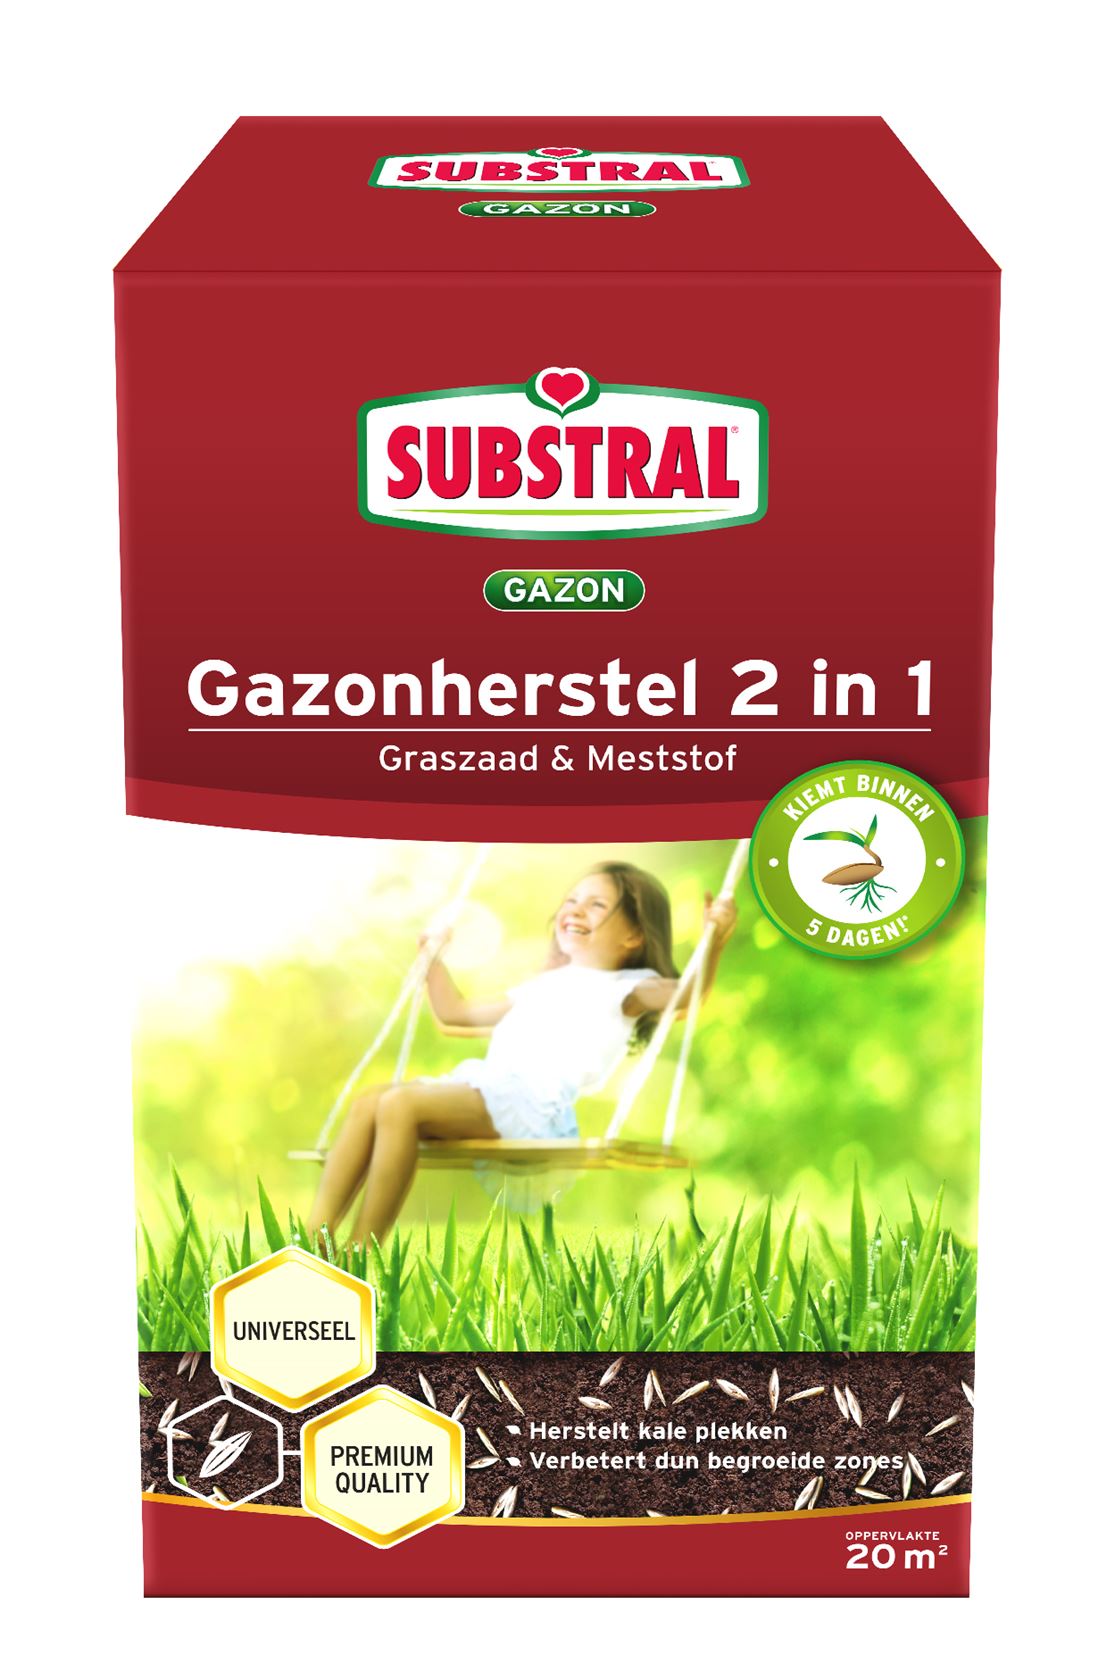 Substral-Gazonherstel-Graszaad-Meststof-2-In-1-20m-1-